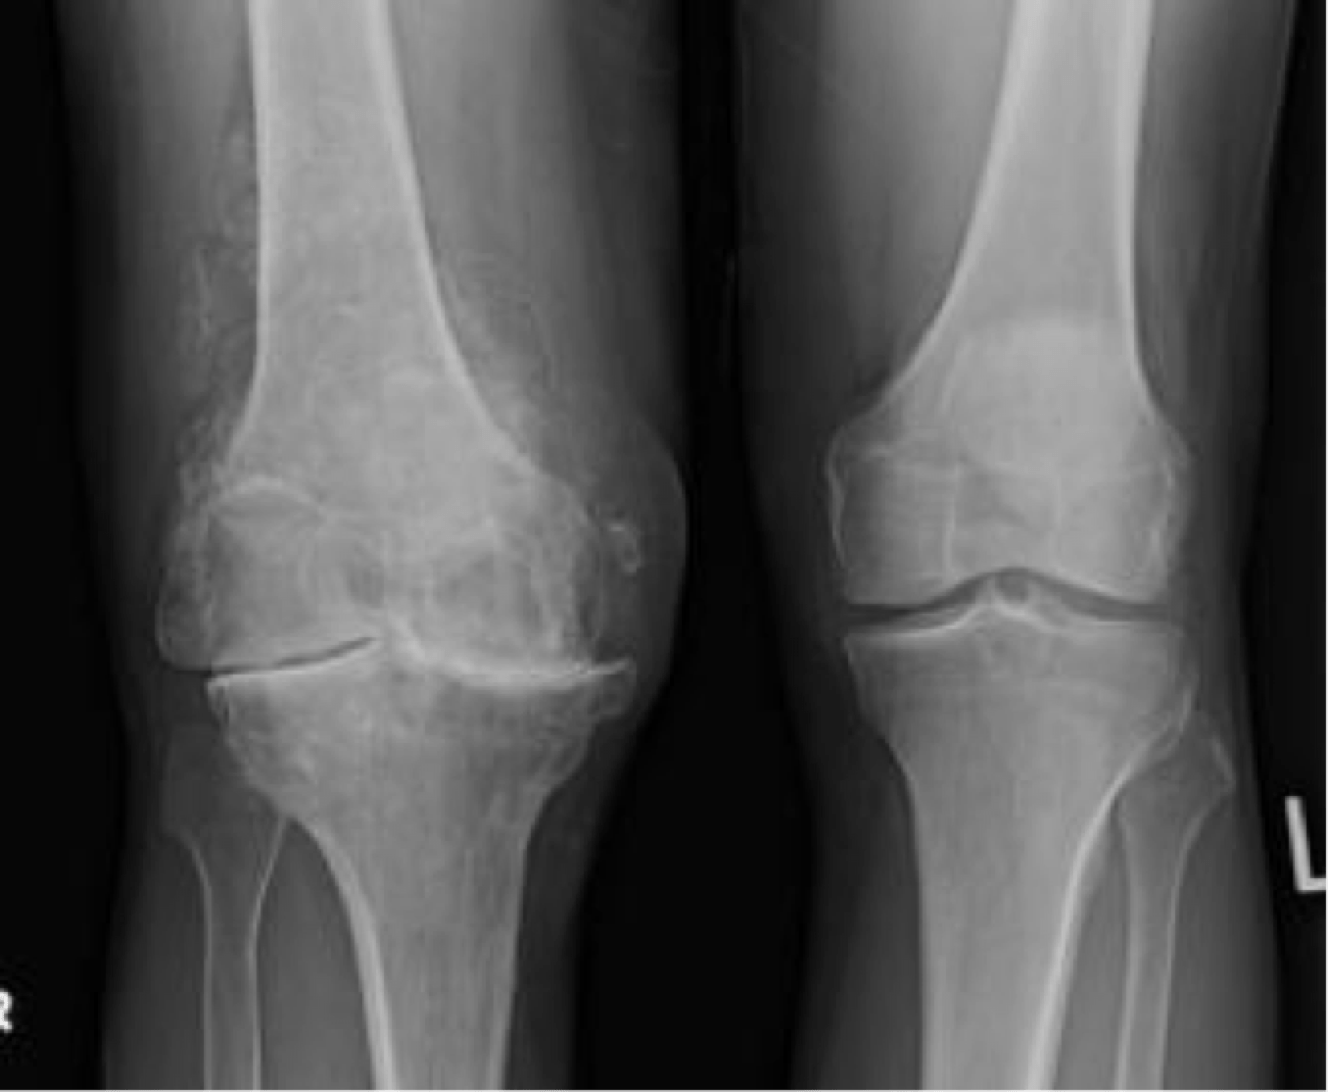 Артроз коленного сустава название. Гонартроз 4 степени коленного сустава рентген. Доа коленного сустава на рентгене. Деформирующий остеоартроз рентген. Деформирующий артроз (остеоартроз).